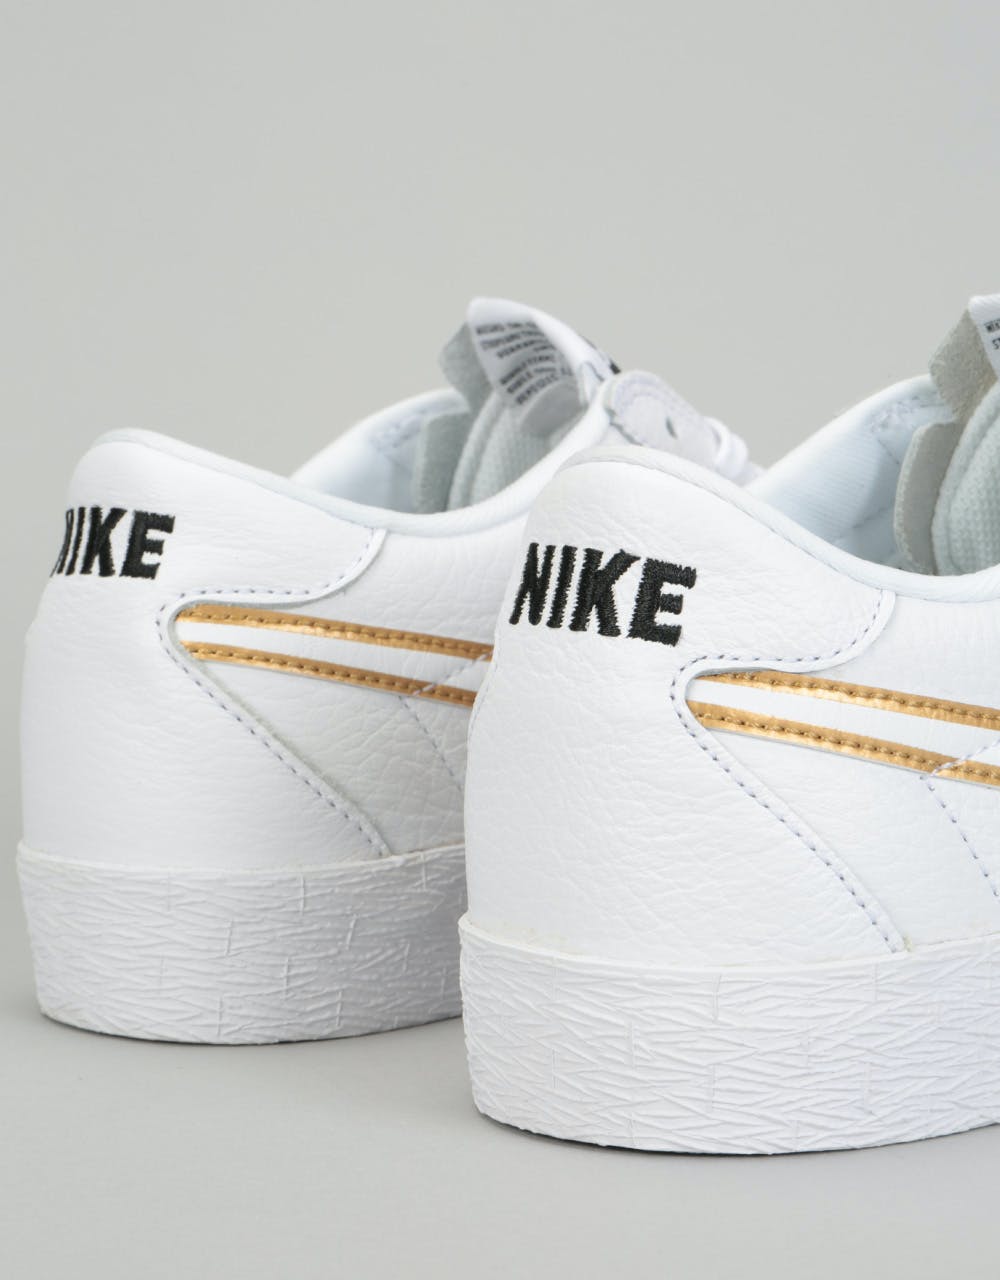 Nike SB Zoom Bruin Premium SE Skate Shoes - White/Wht-Met. Gold-Black